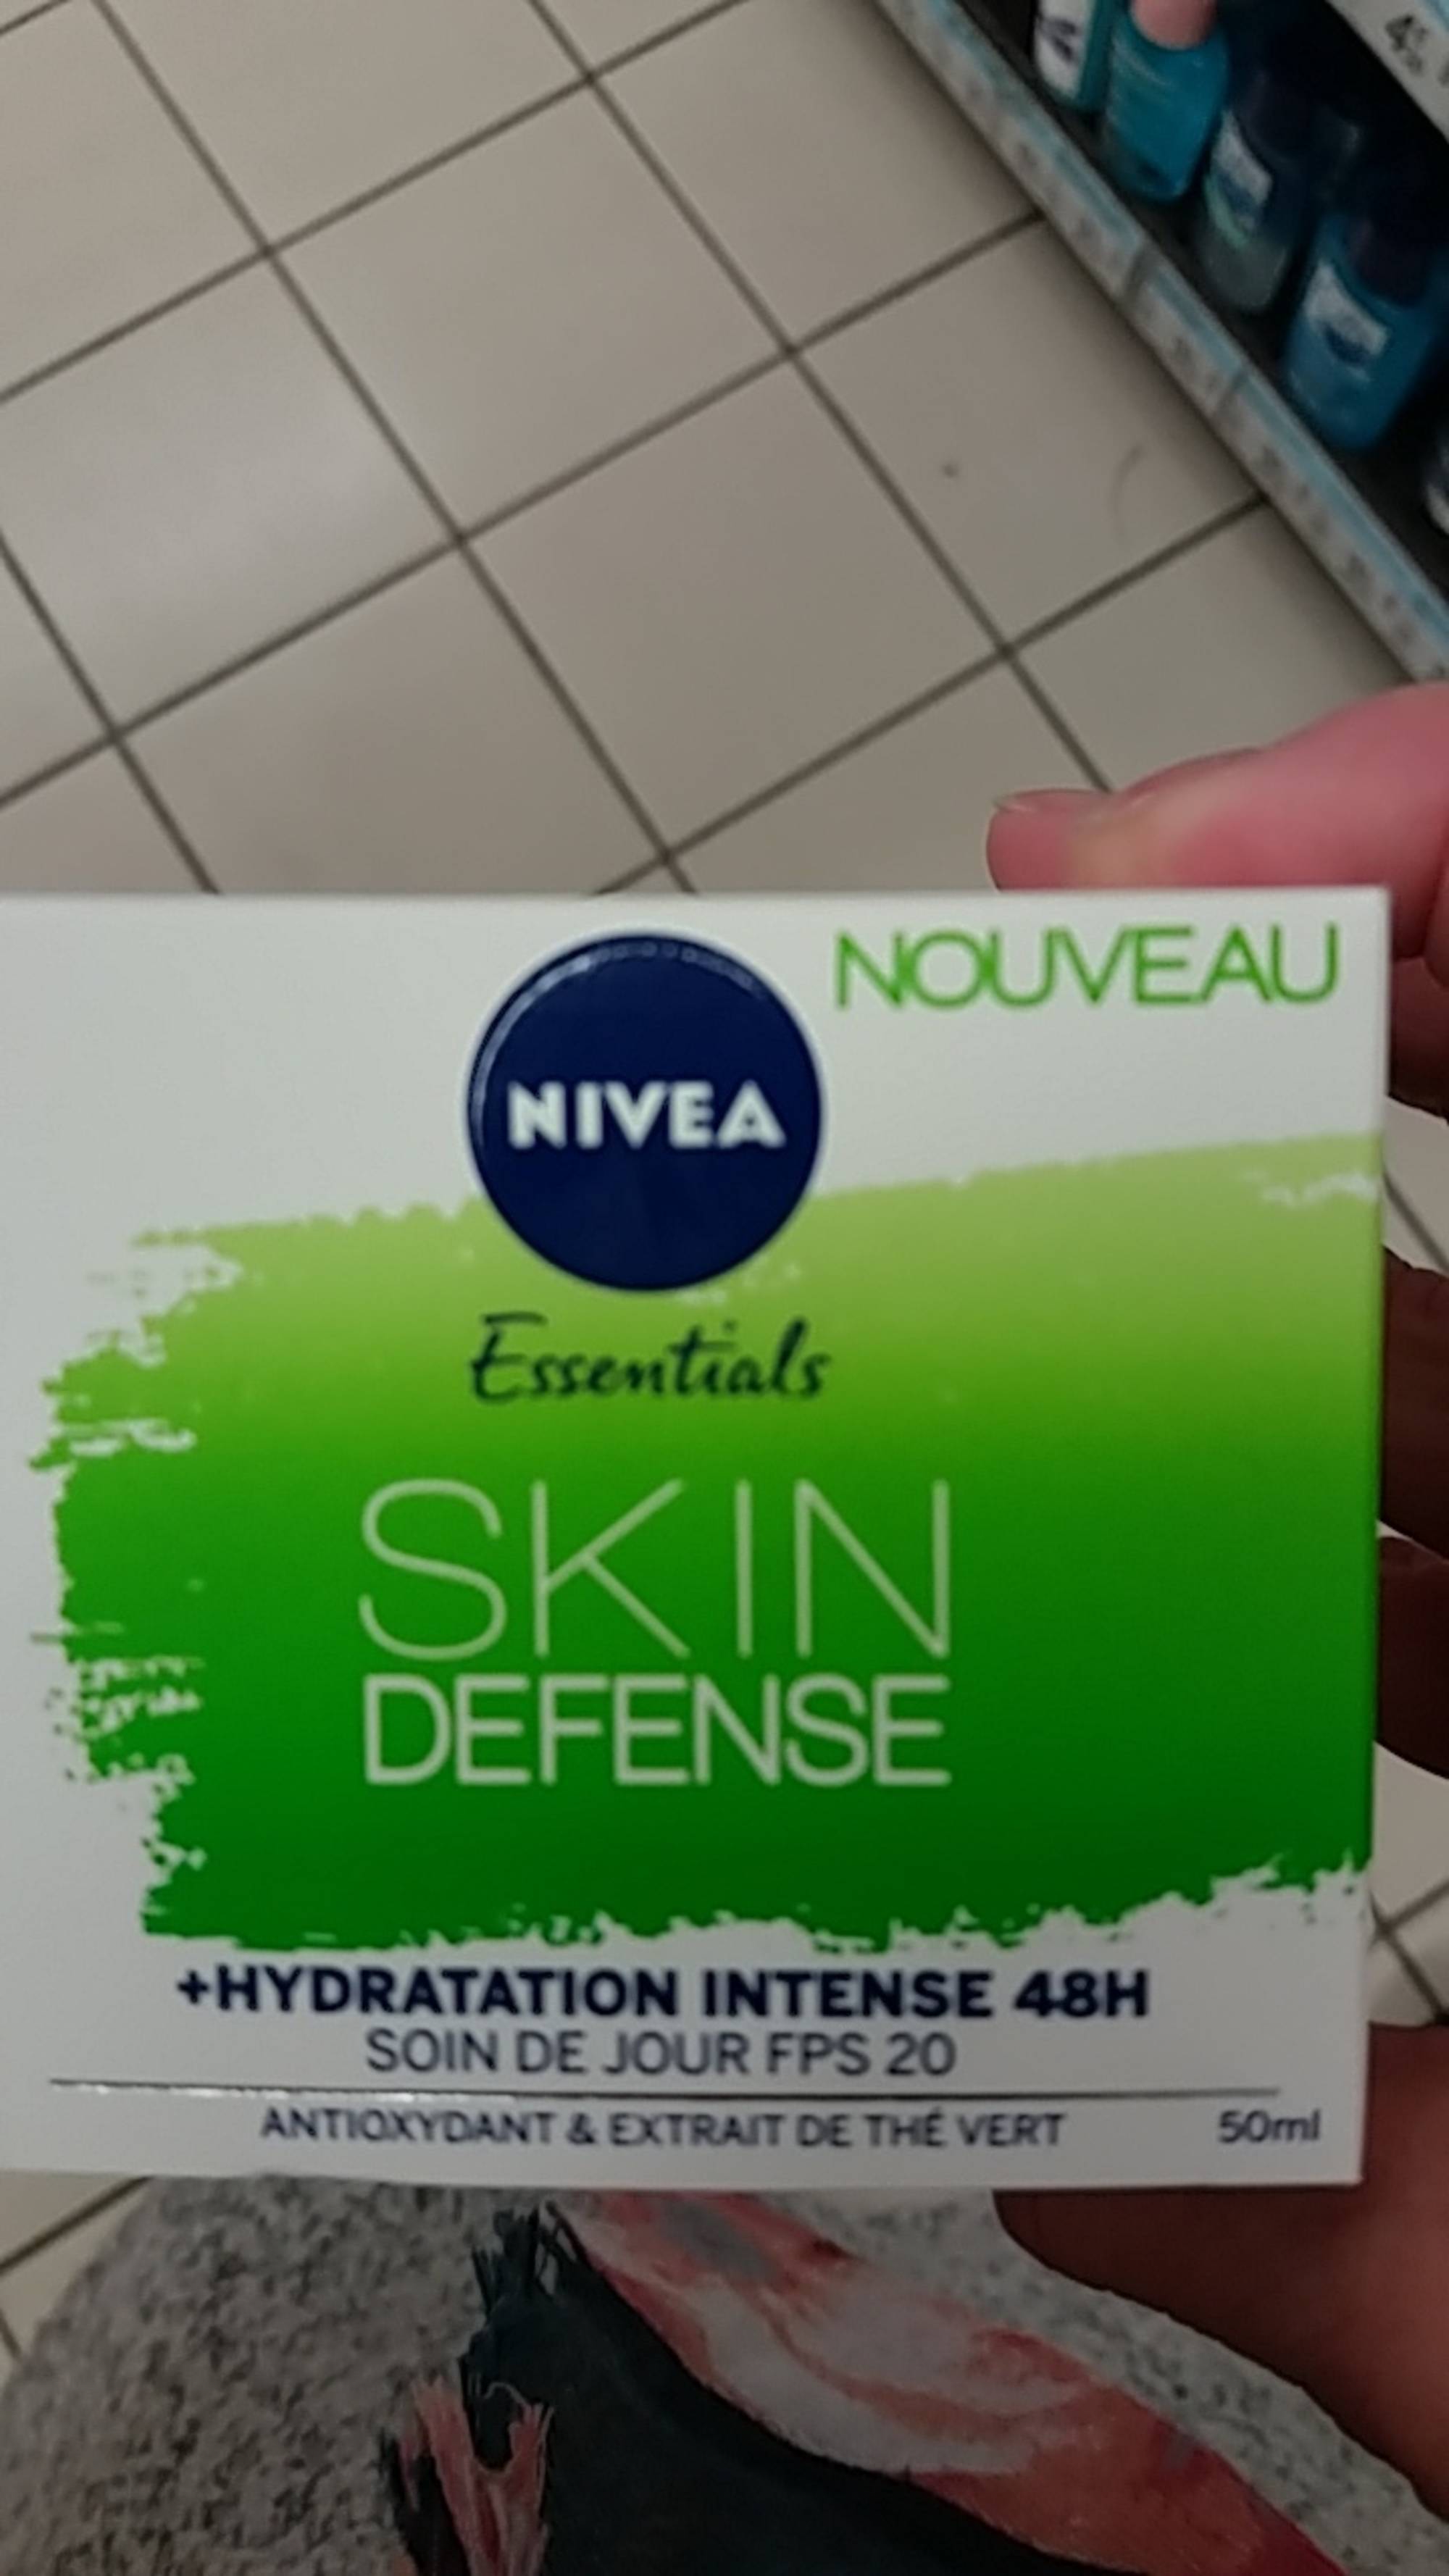 NIVEA - Essentials skin defense soin de jour fps 20